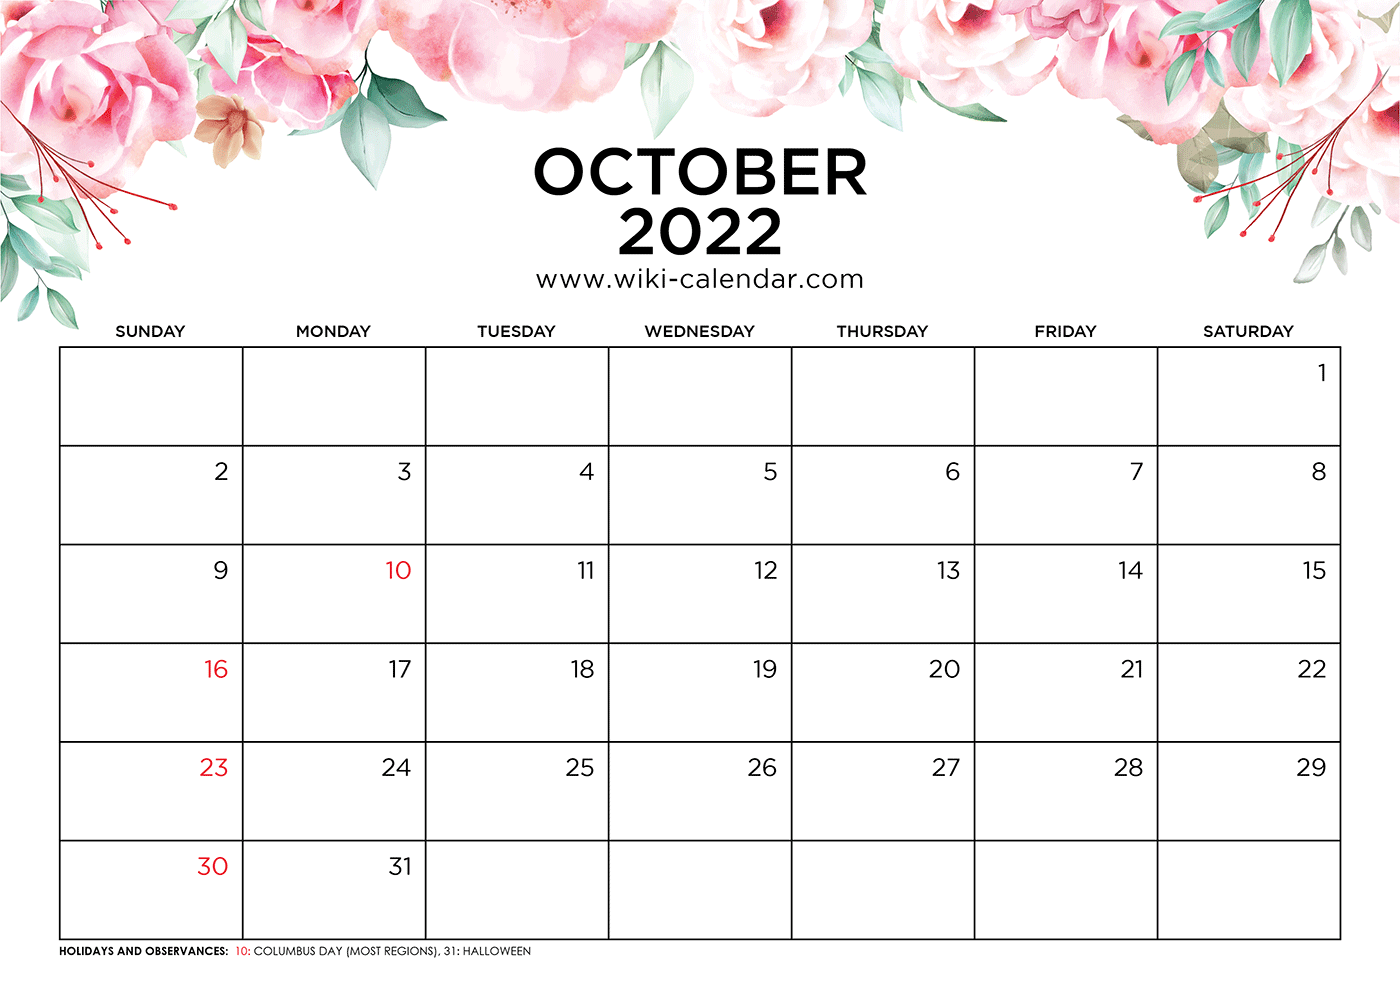 Oct 2022 Calendar With Holidays Free Printable October 2022 Calendars - Wiki Calendar